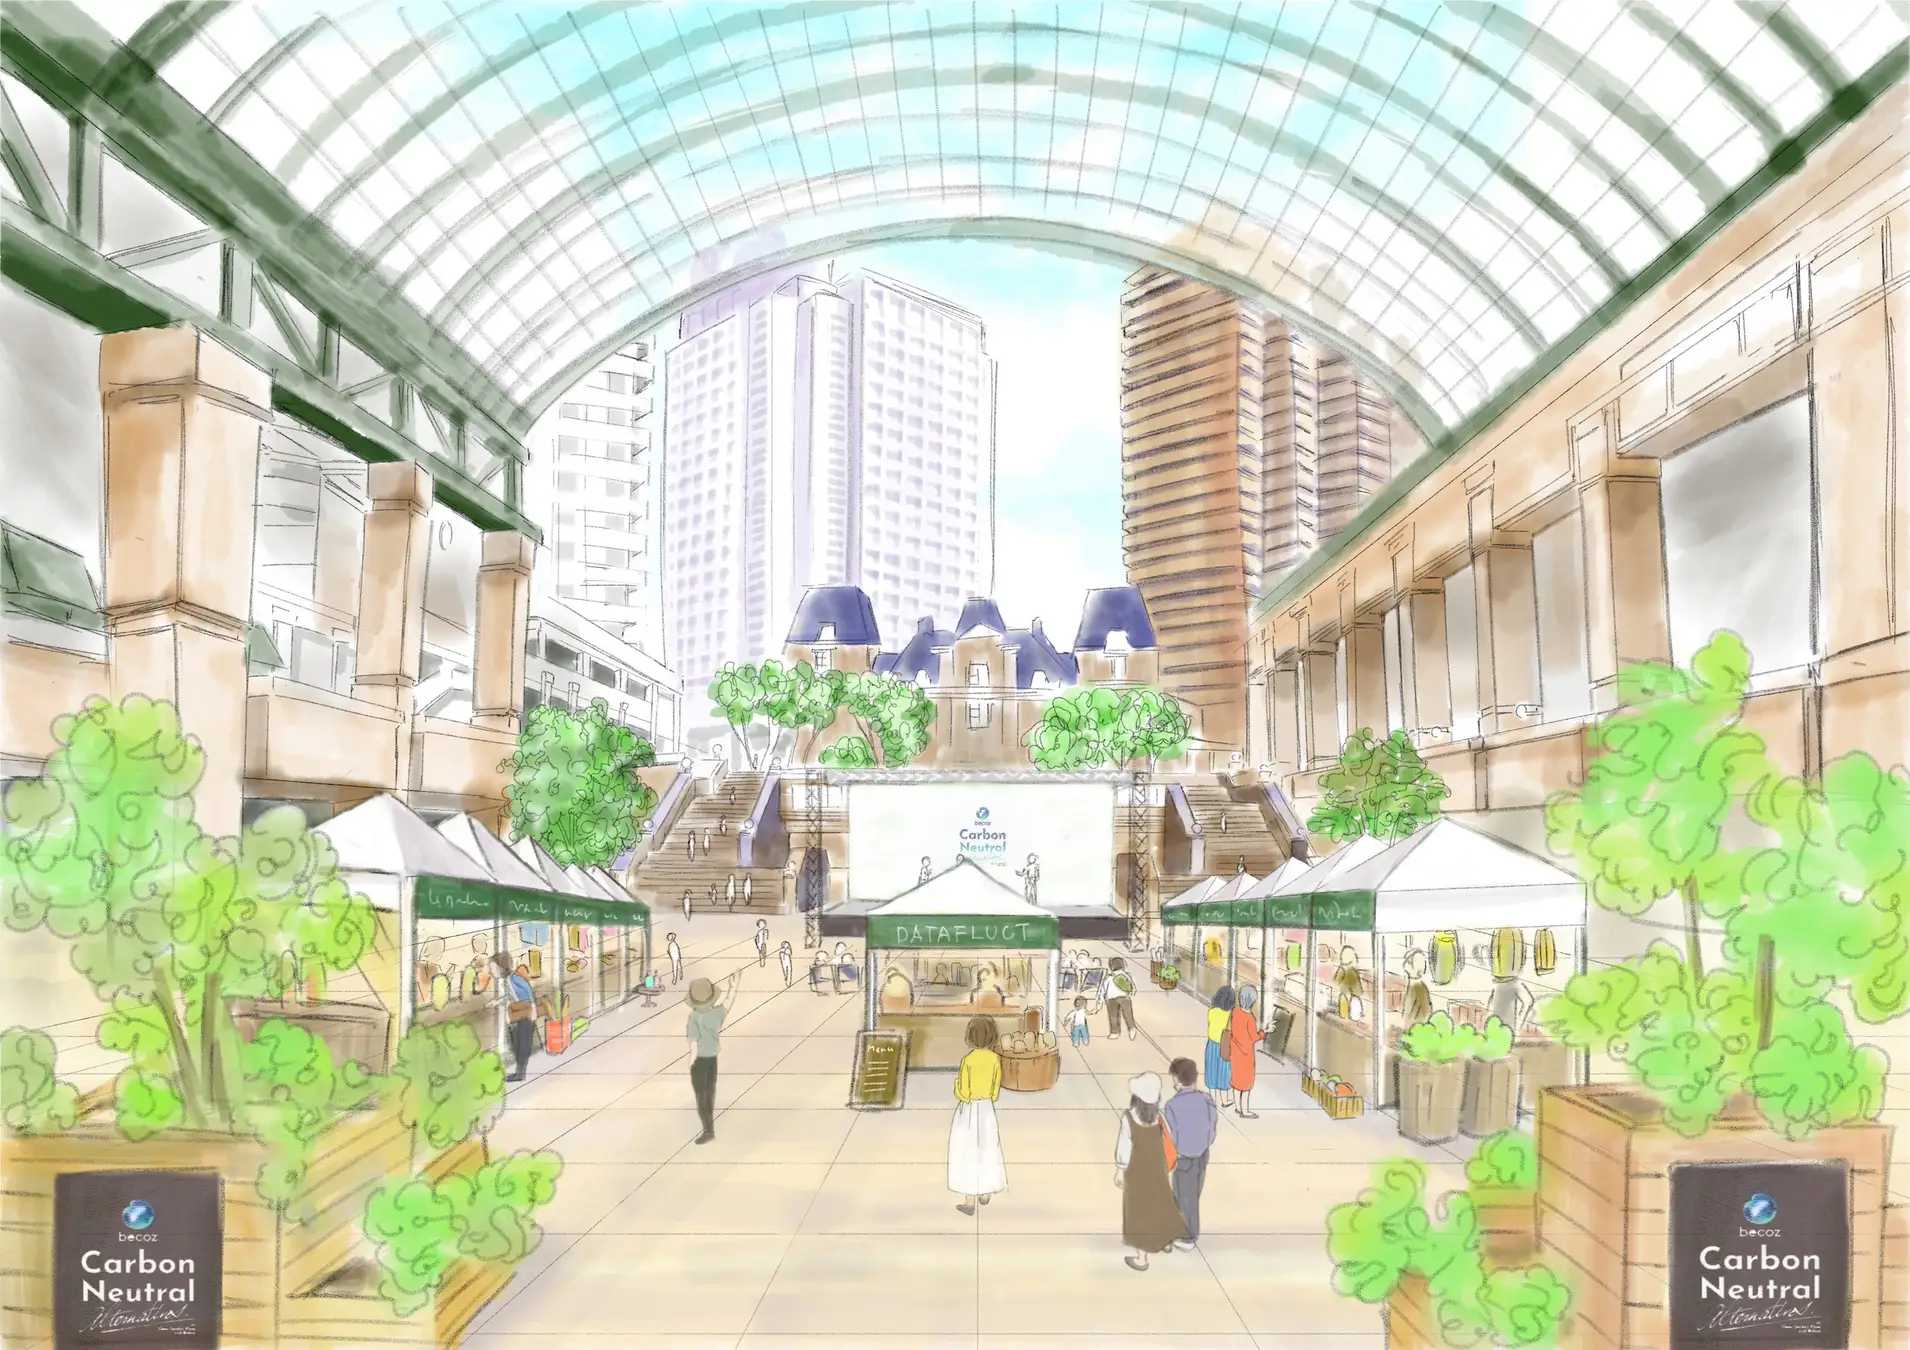 【LOVST TOKYO】「Carbon Neutral Alternatives　 脱炭素の未来をつくる、あたらしい選択肢」で代表・唐沢が登壇 LOVST TOKYO